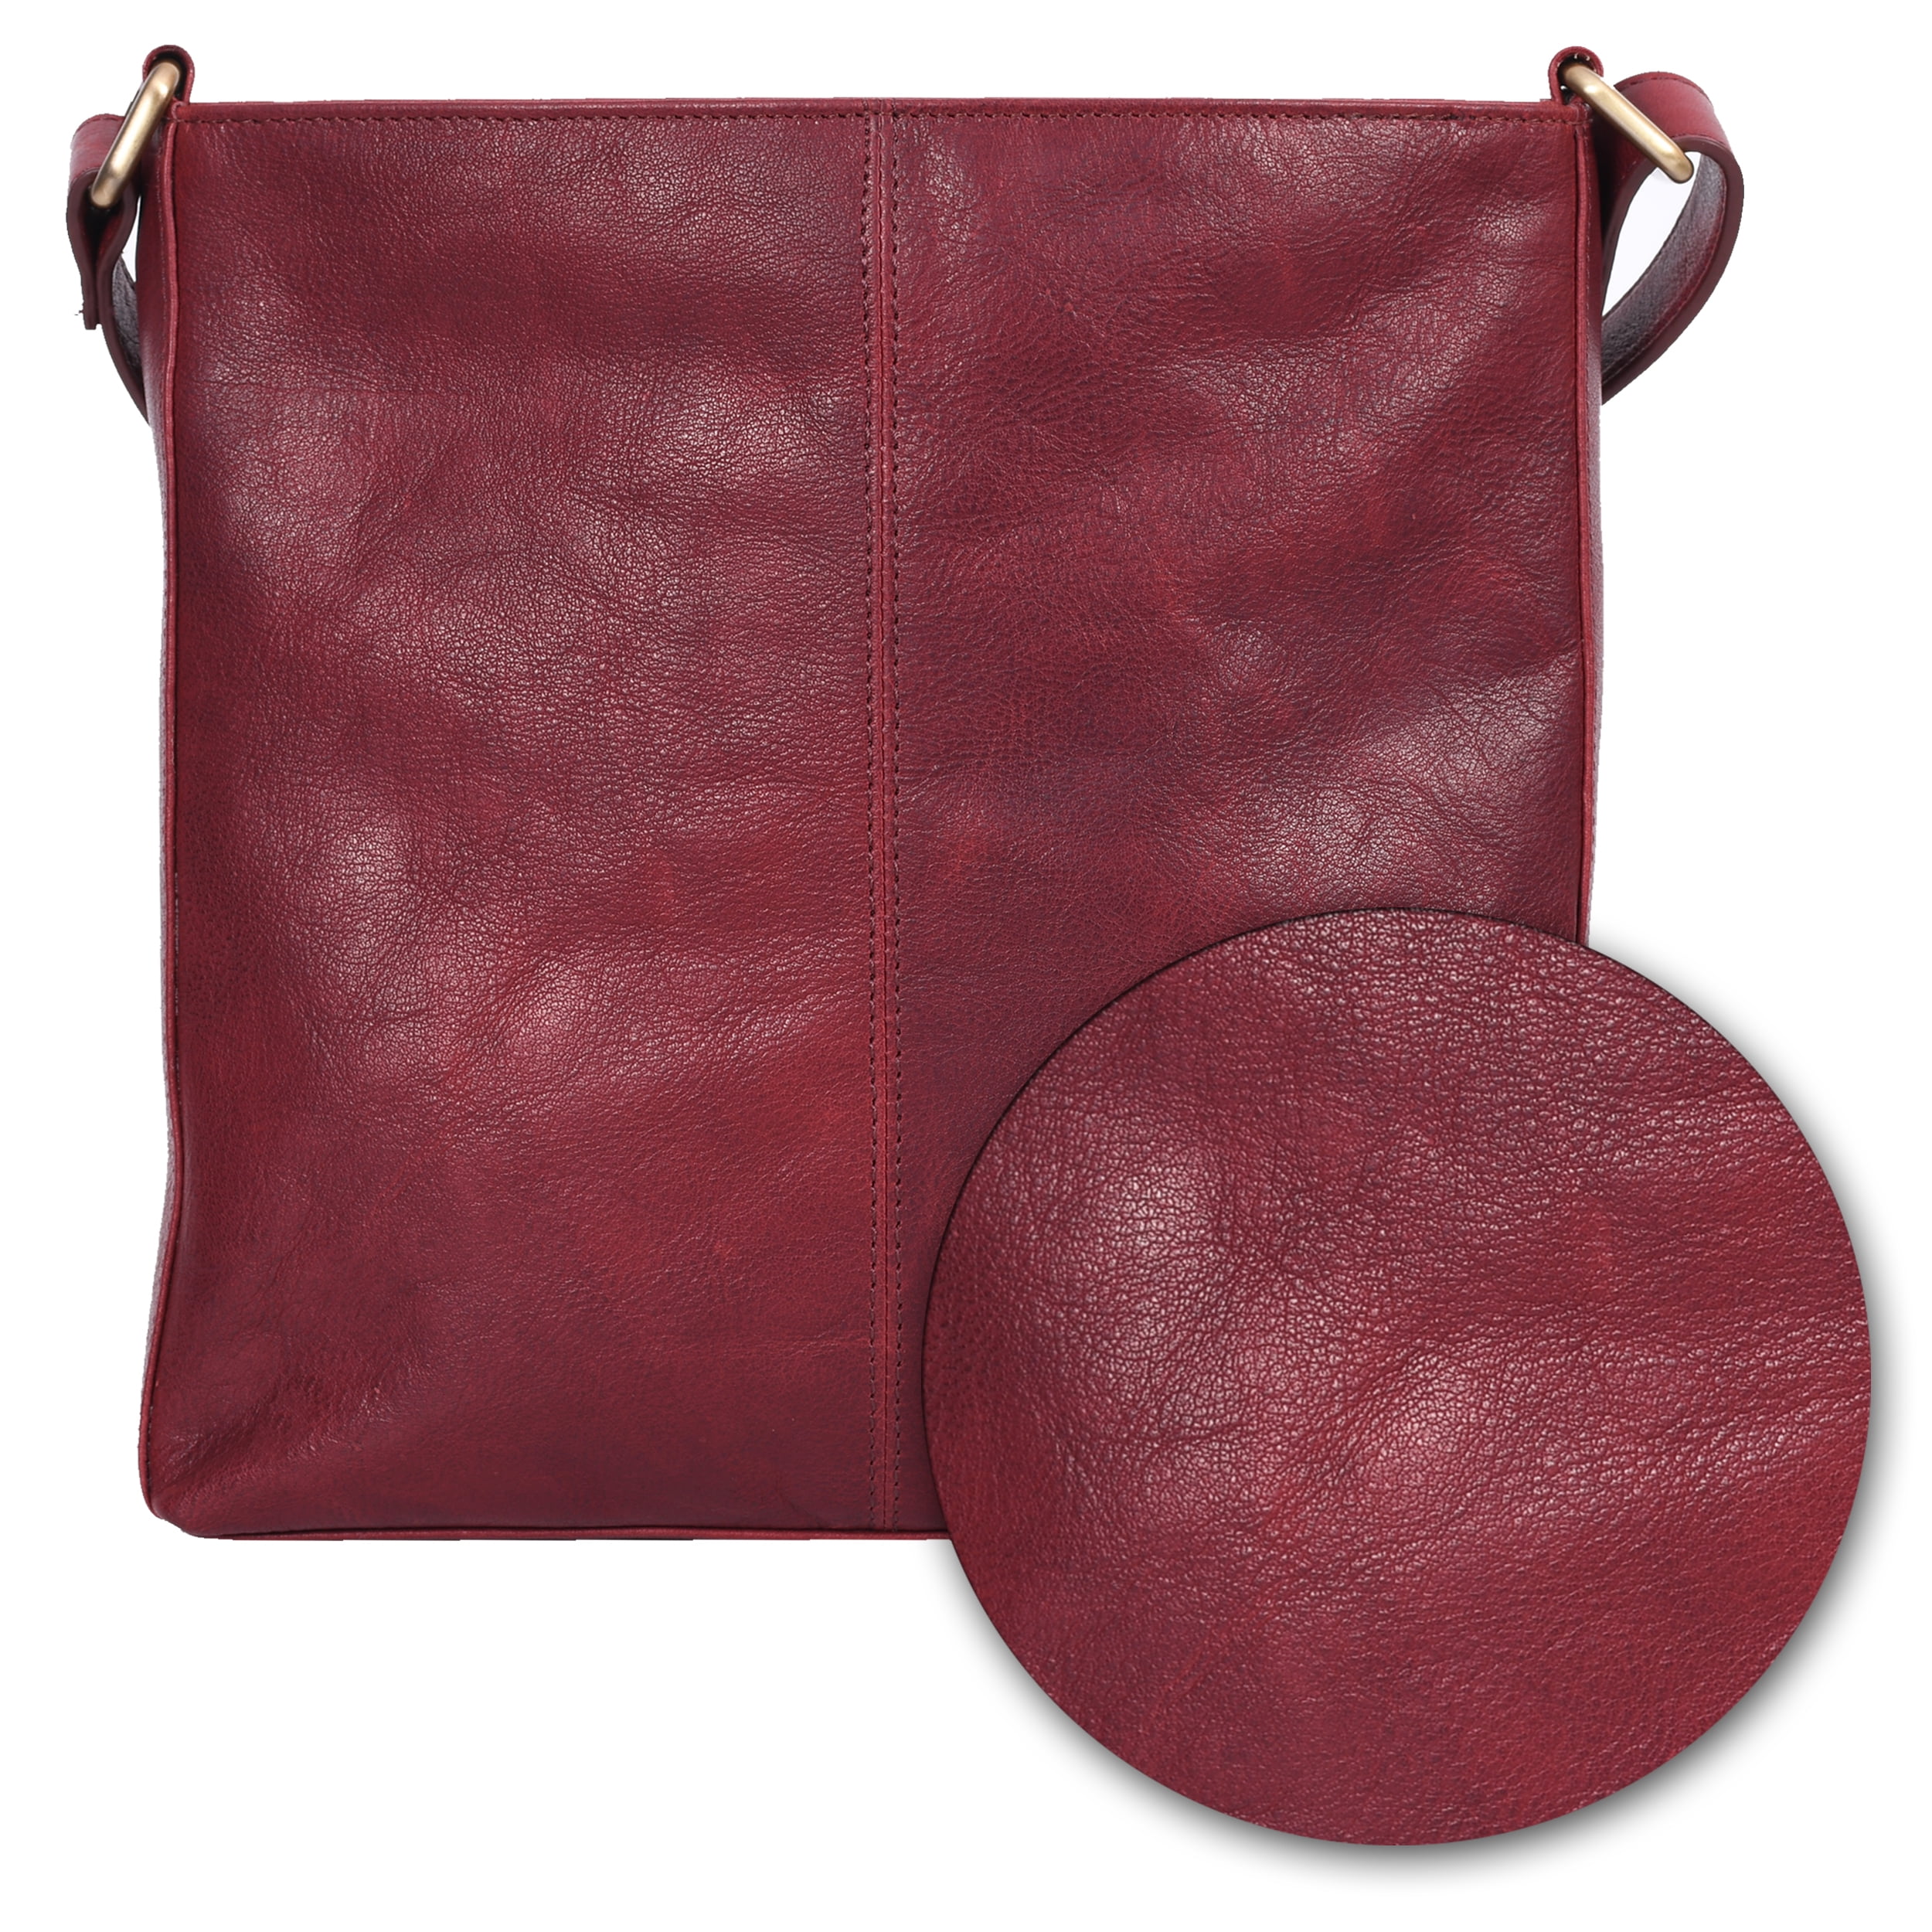 Estalon Crossbody Bags for Women - Leather Travel Purse with Adjustable  Shoulder Strap (Ermine)